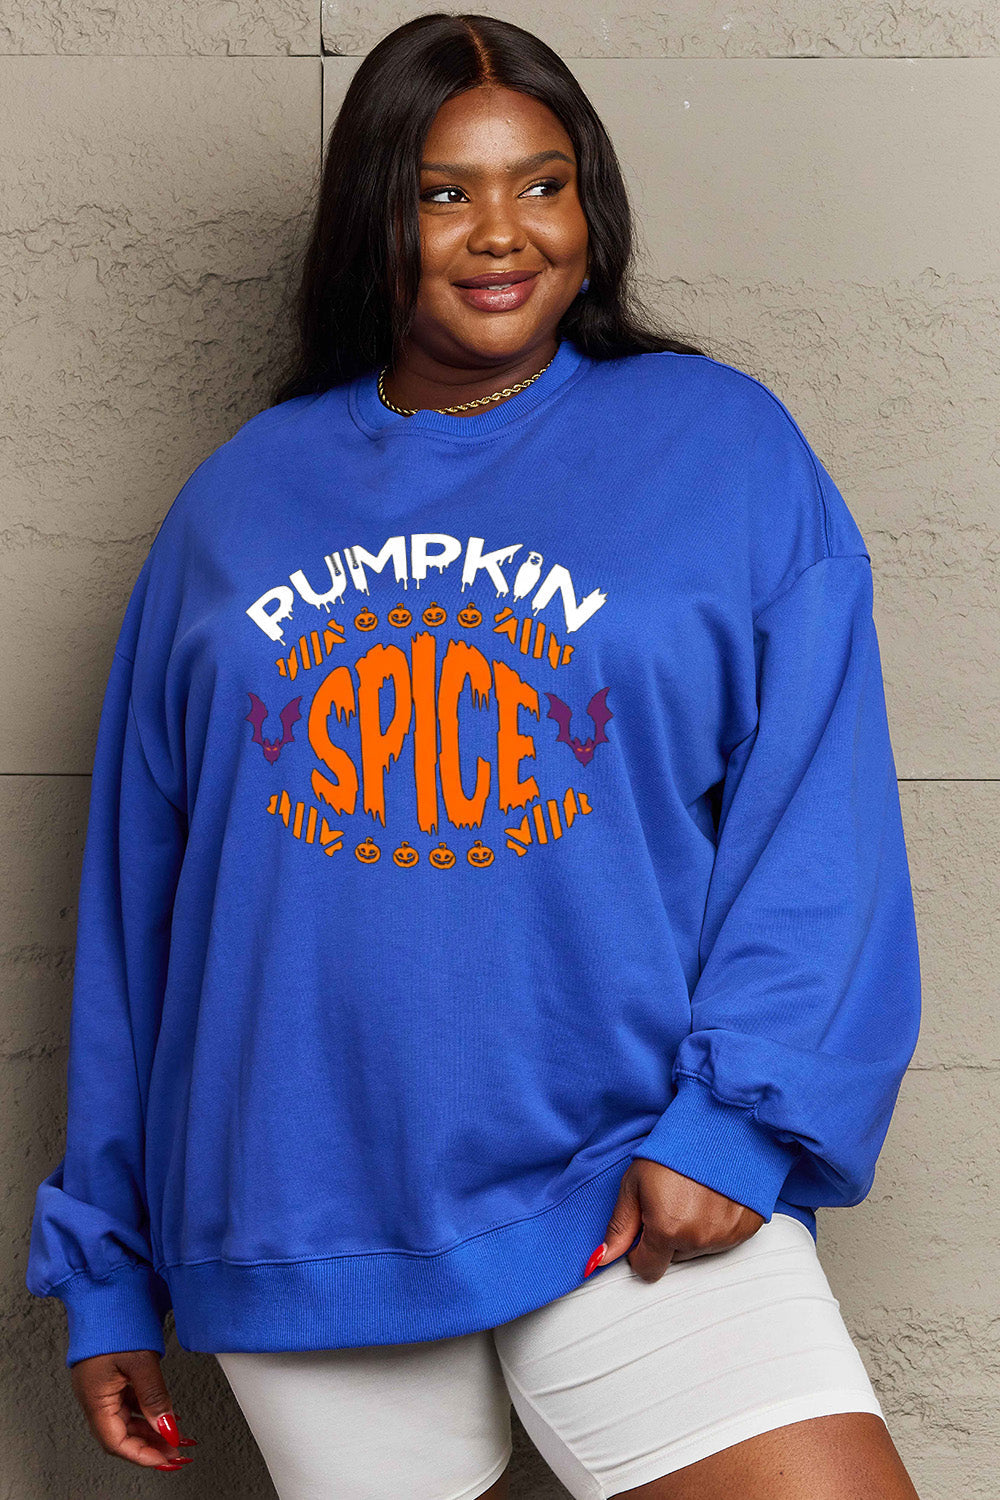 Simply Love Full Size PUMPKIN SPICE Graphic Sweatshirt BLUE ZONE PLANET